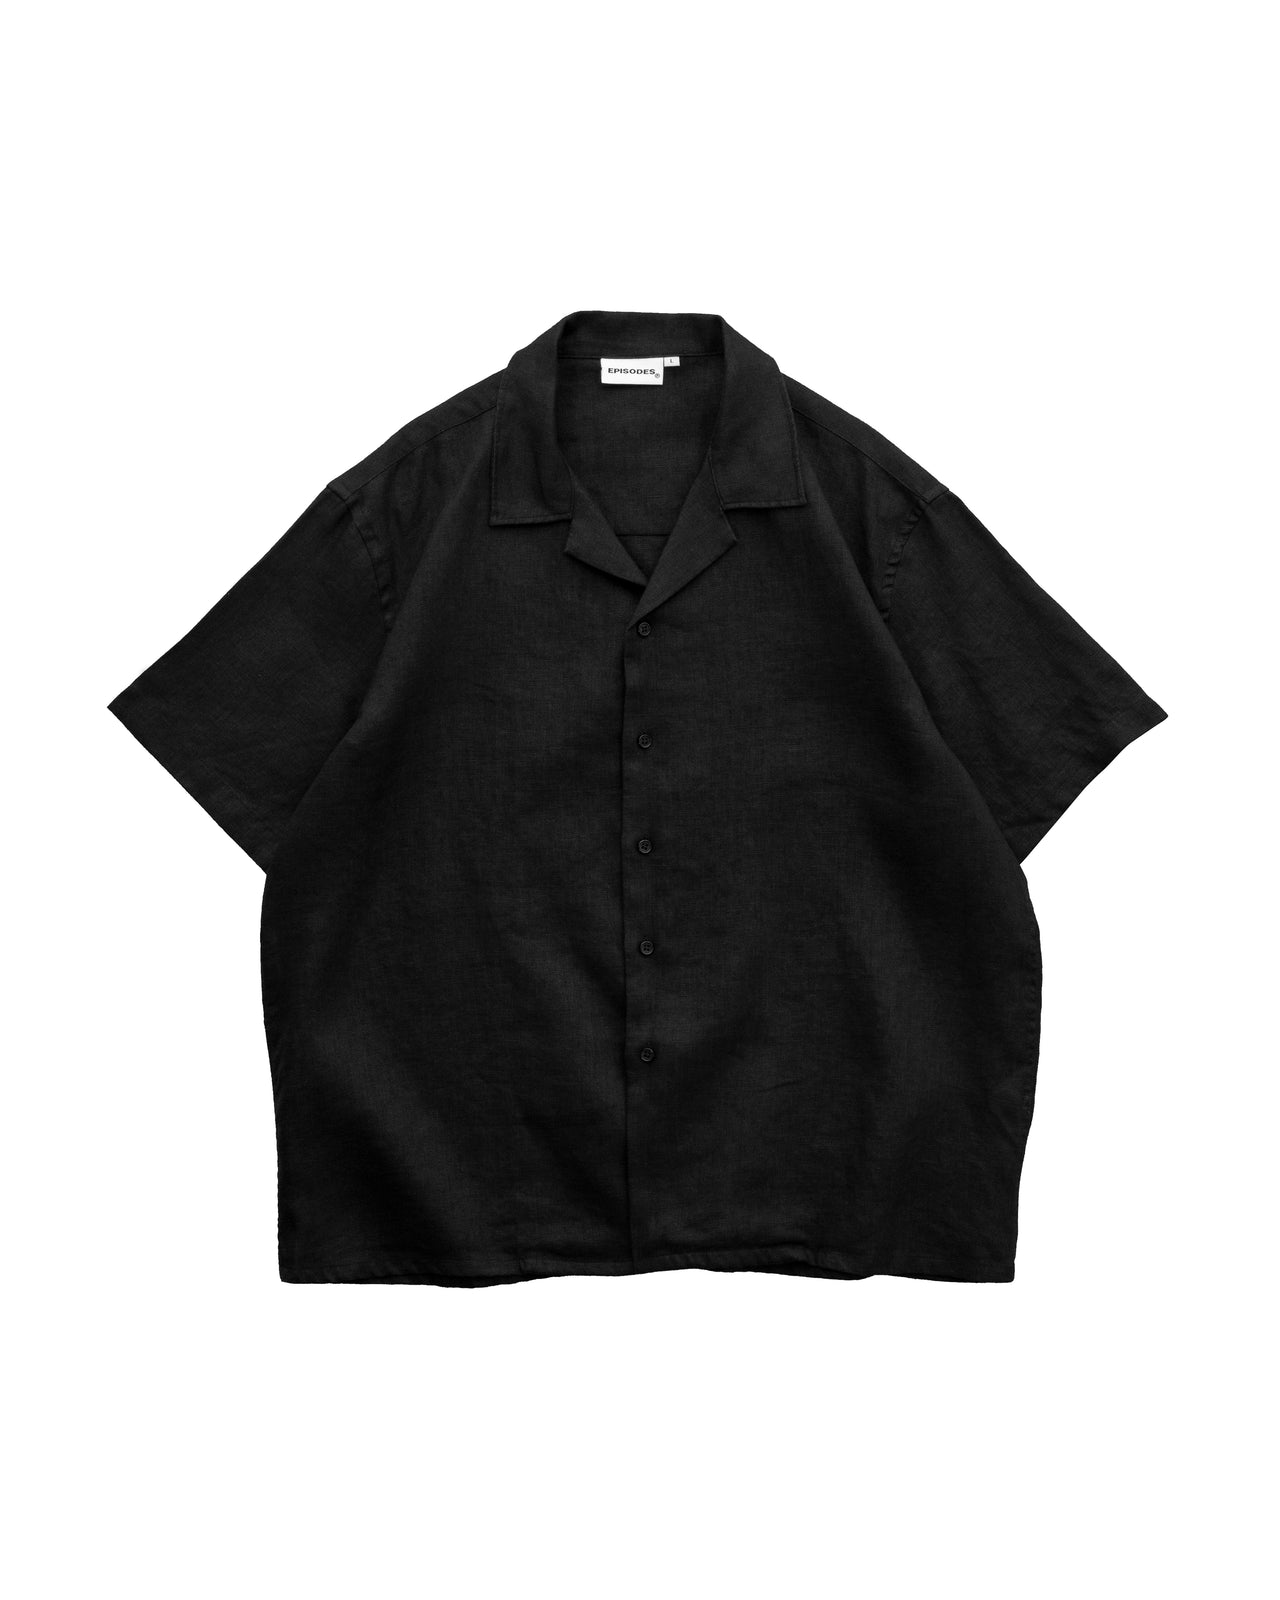 Episodes Black Linen Shirt